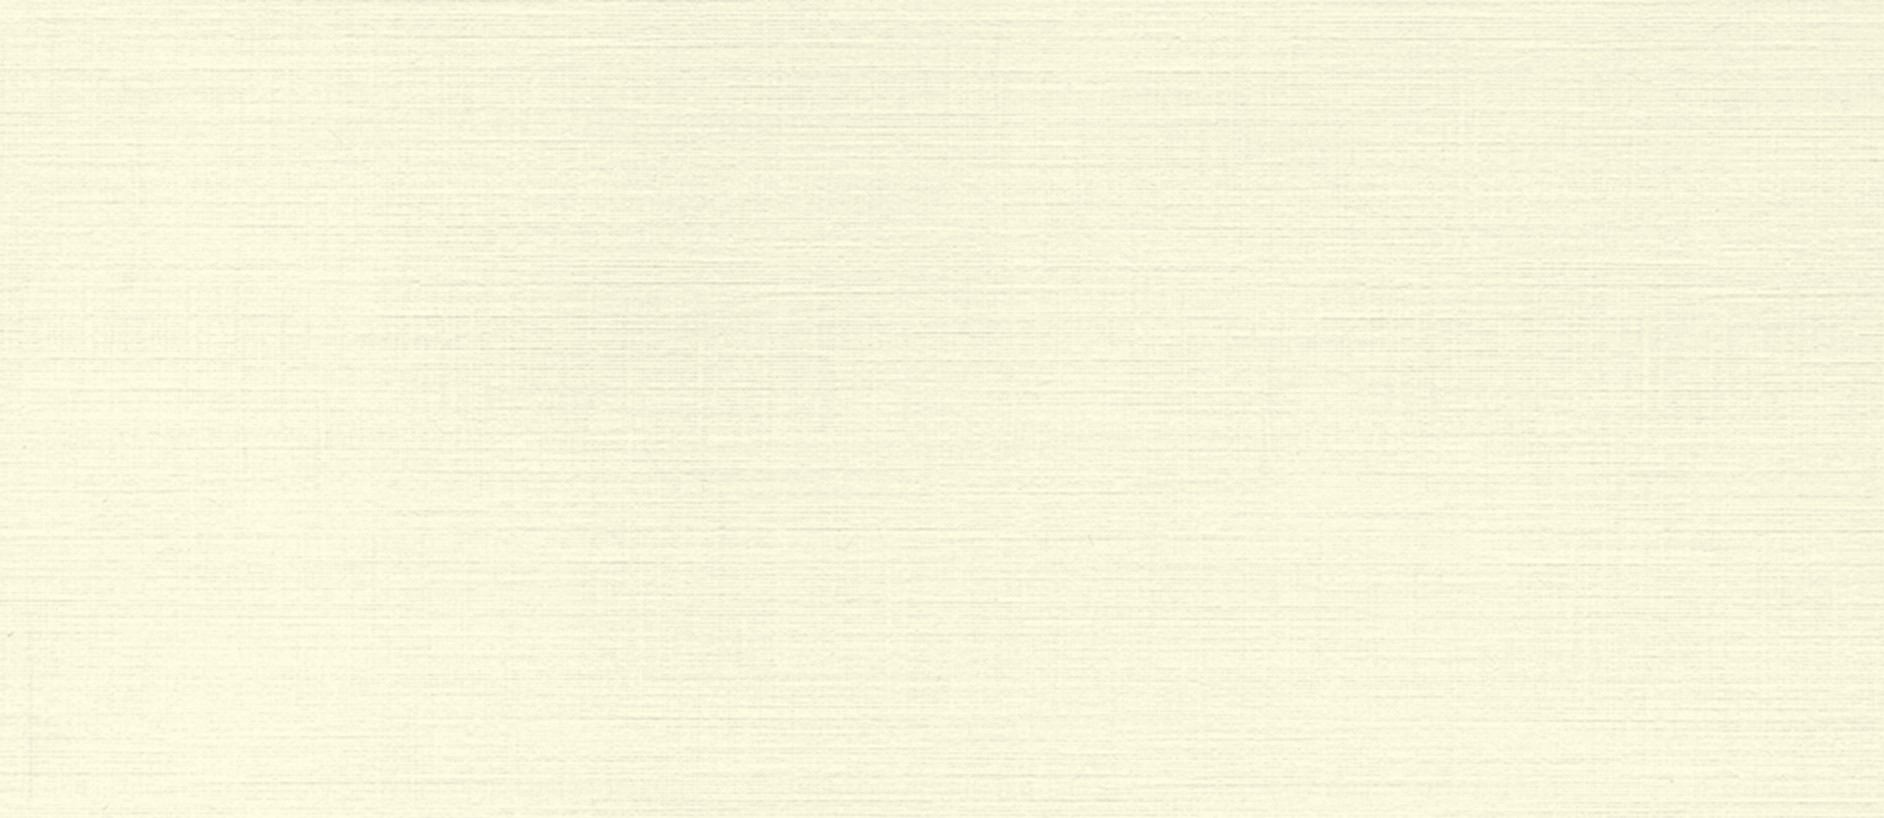 Classic Linen Digital 100lb Cover Natural White